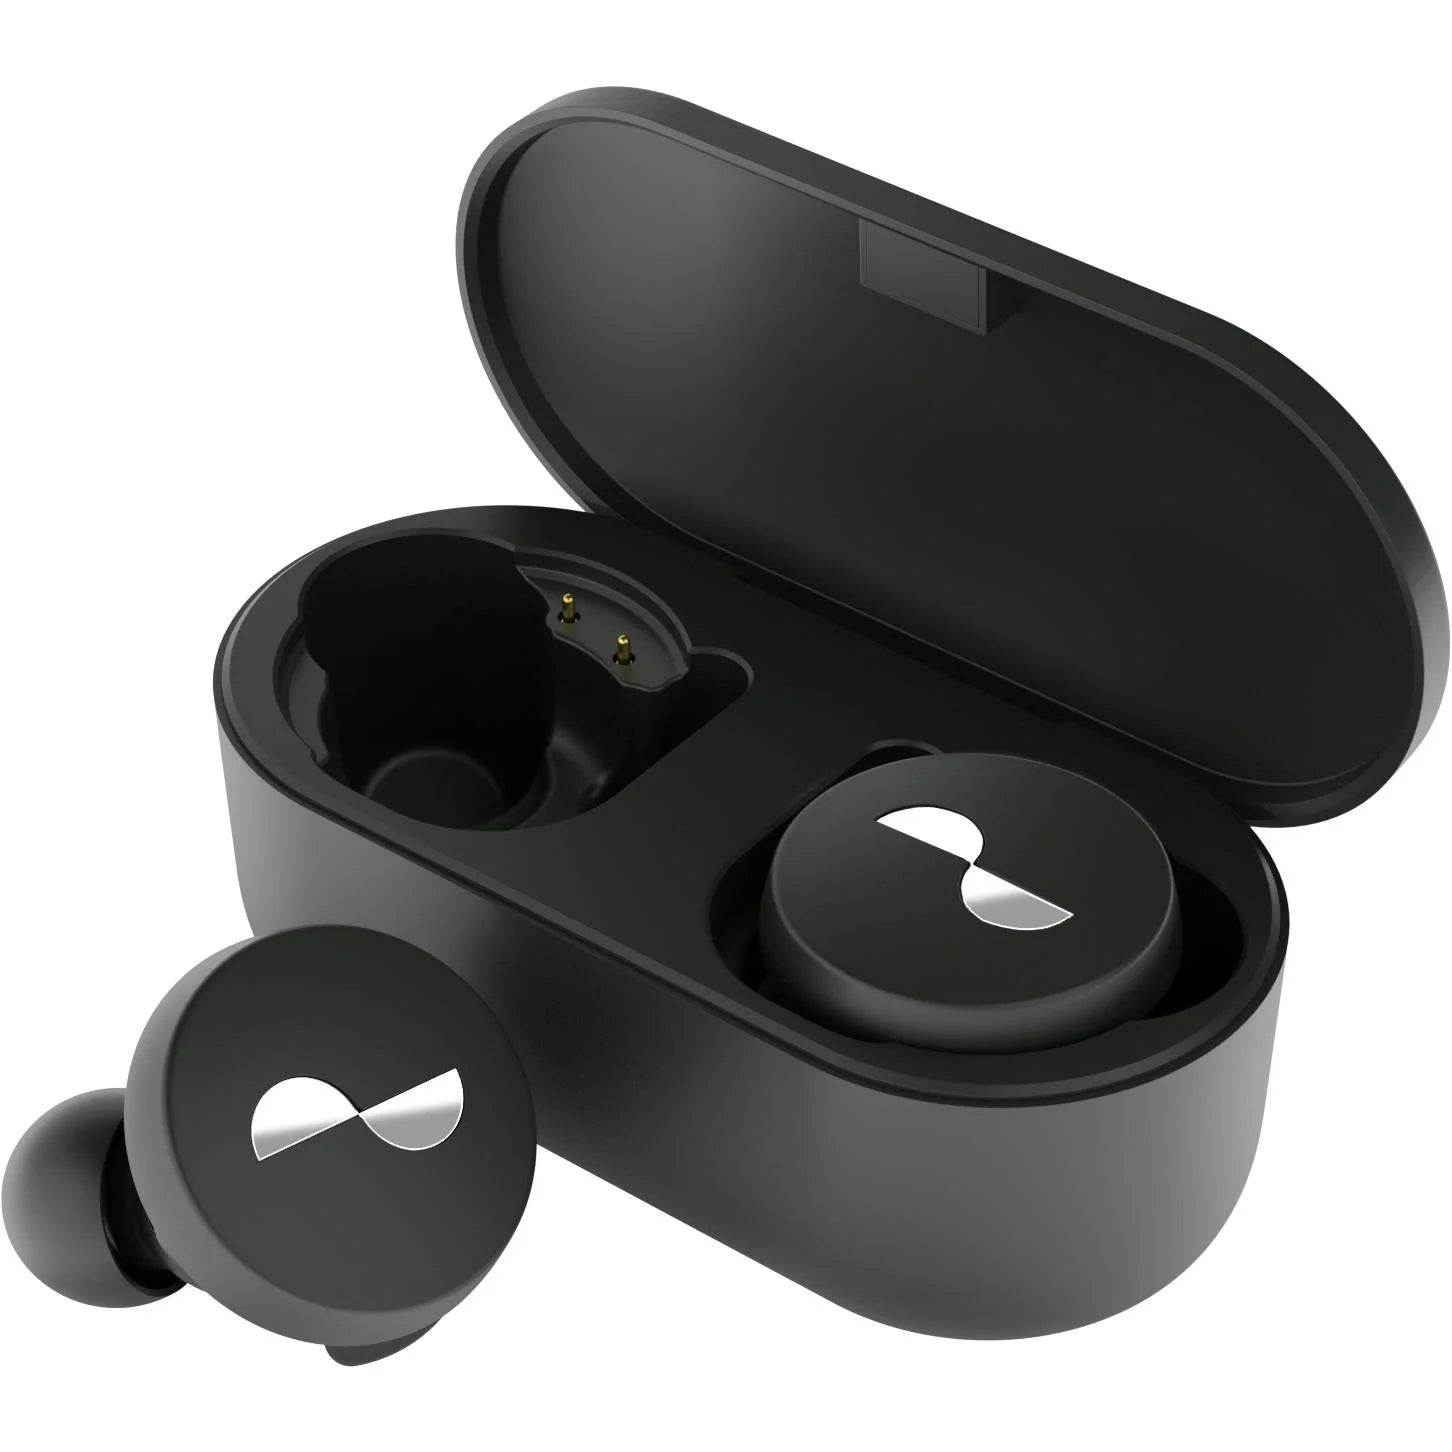 Nura NuraTrue True Wireless ANC In-Ear Headphones - Very Good Condition